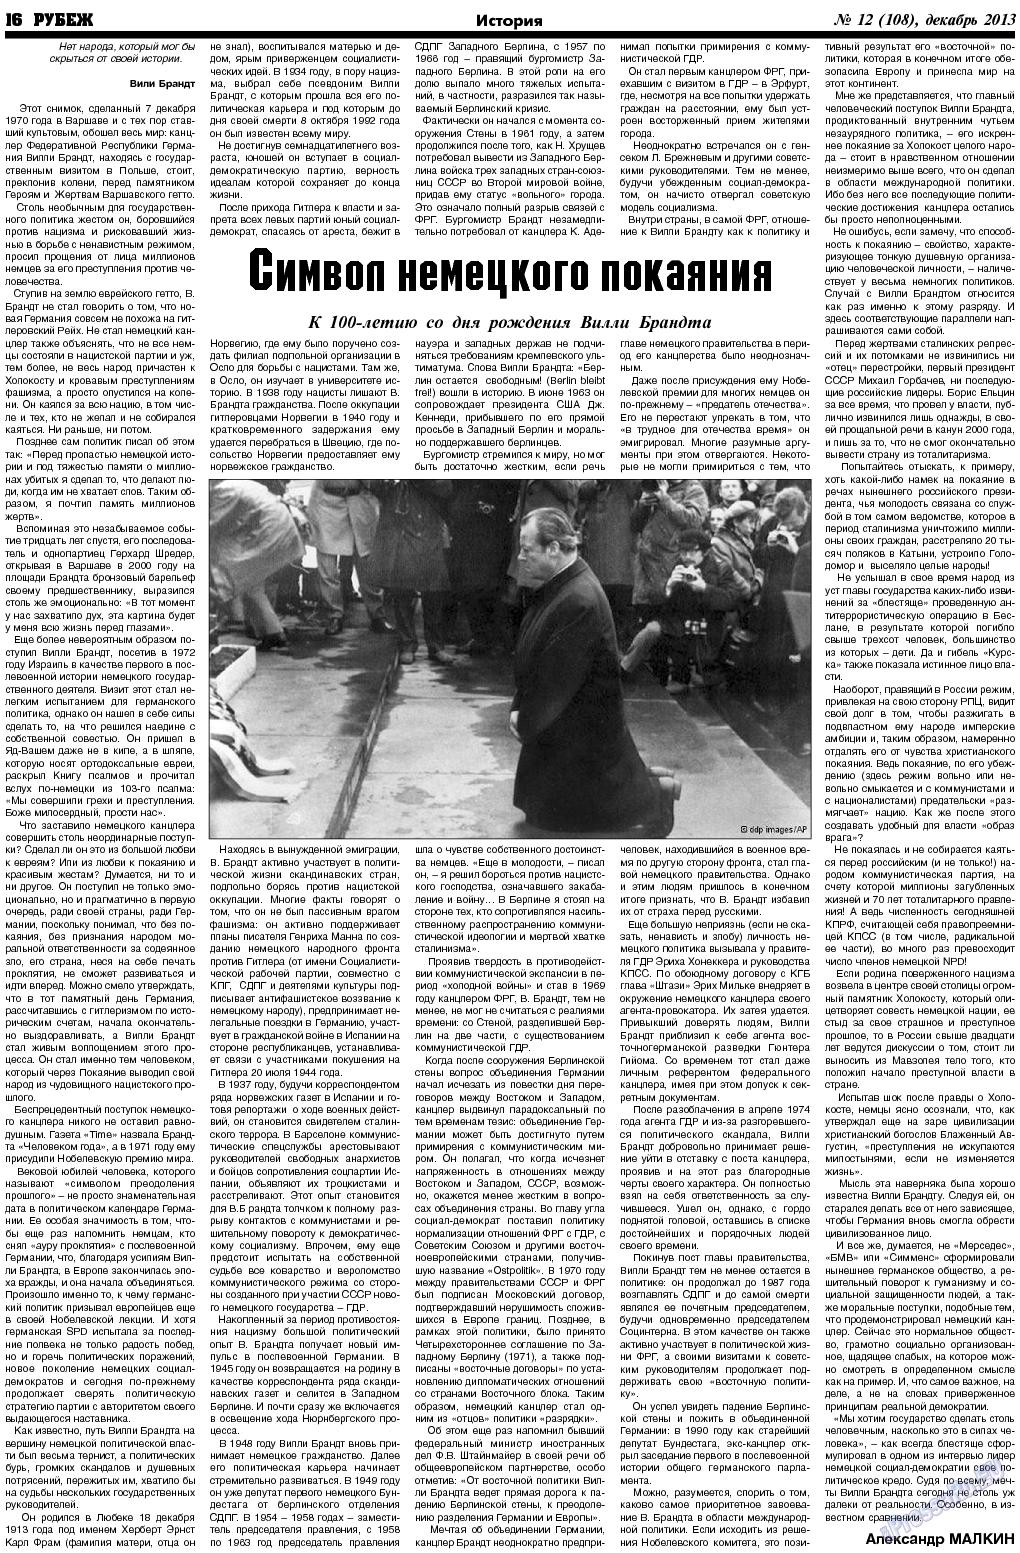 Рубеж, газета. 2013 №12 стр.16